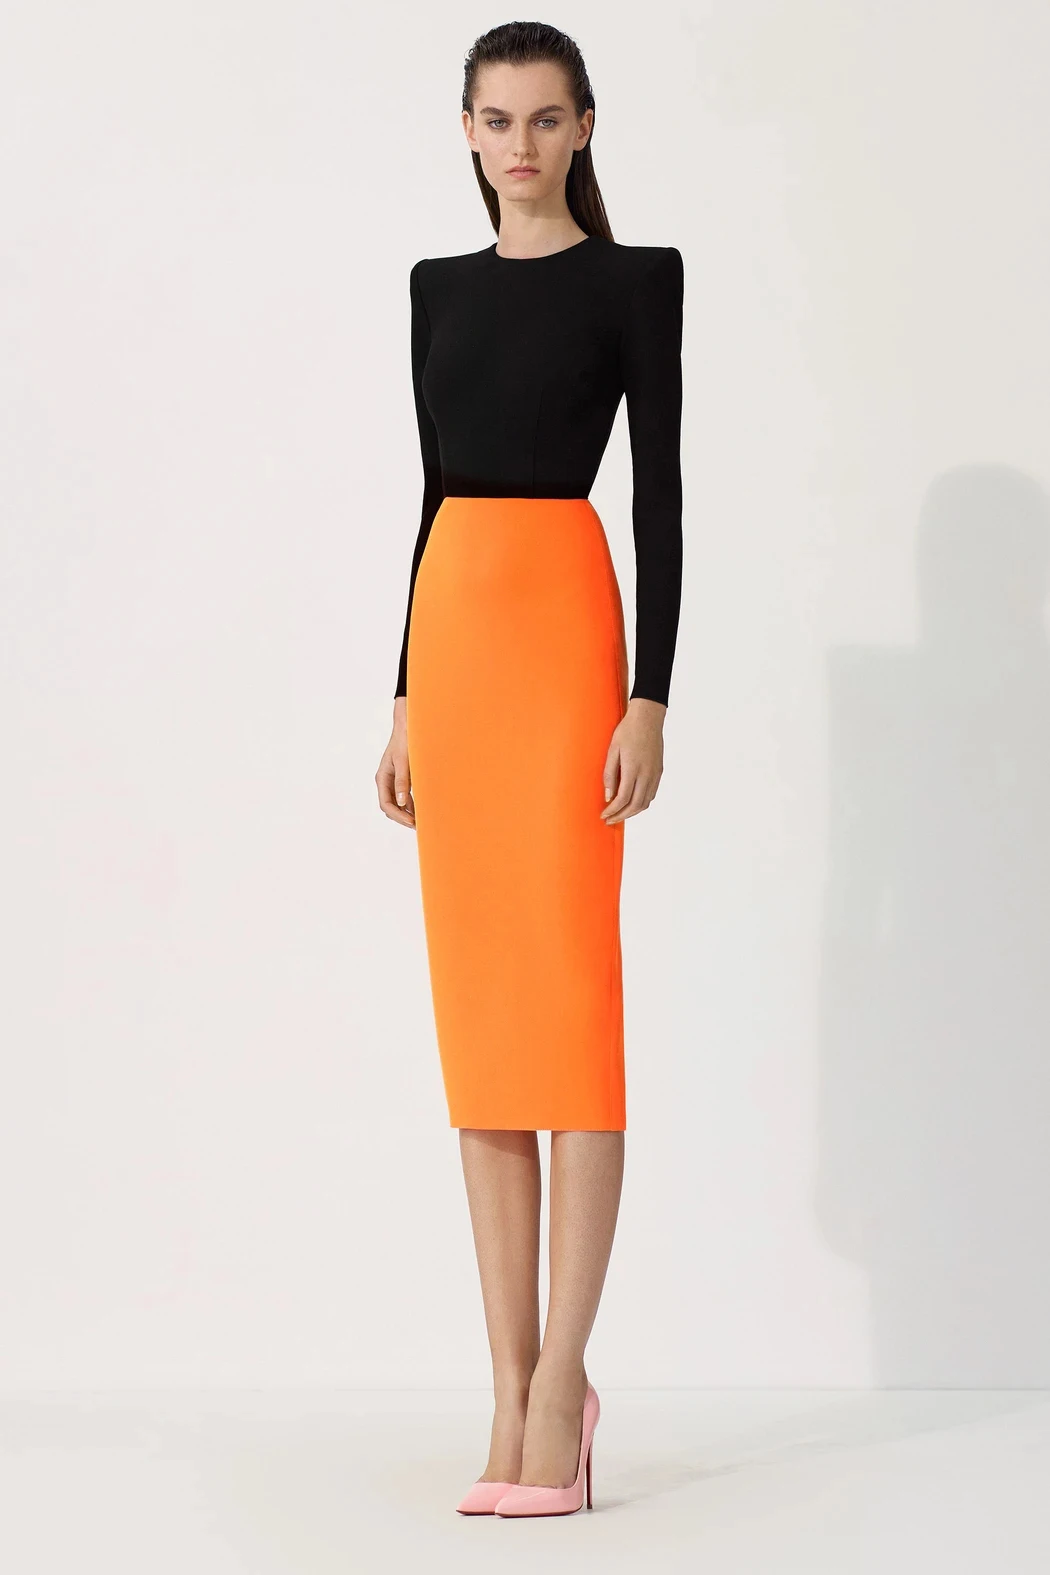 

DEIVE TEGER New Trendy Long Sleeve Color Contrast Black Contrast Orange Bandage Elegant Evening Party Celebrity Womans Dress